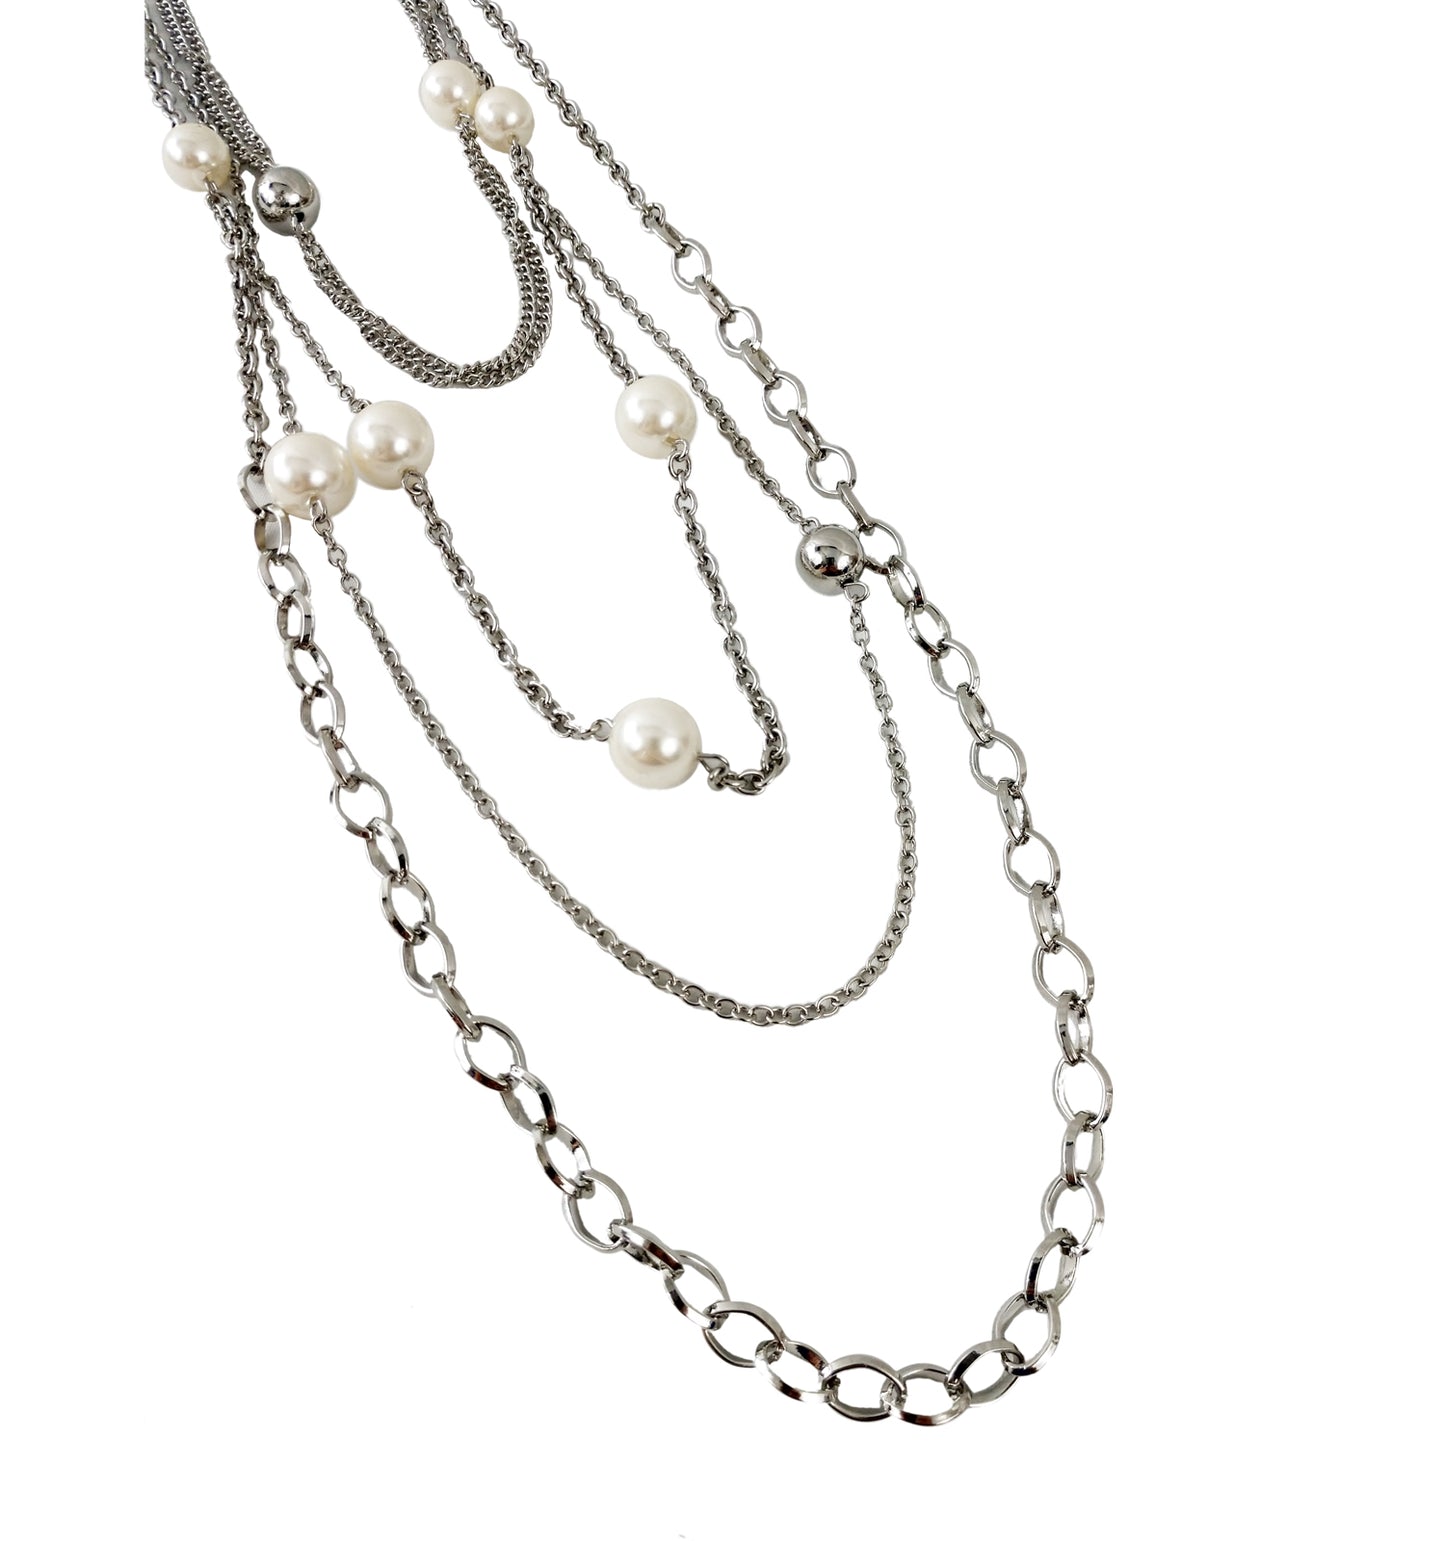 Premier Designs Multi Strand Silver Tone Chain Faux Pearl Necklace 25-28" NWOT